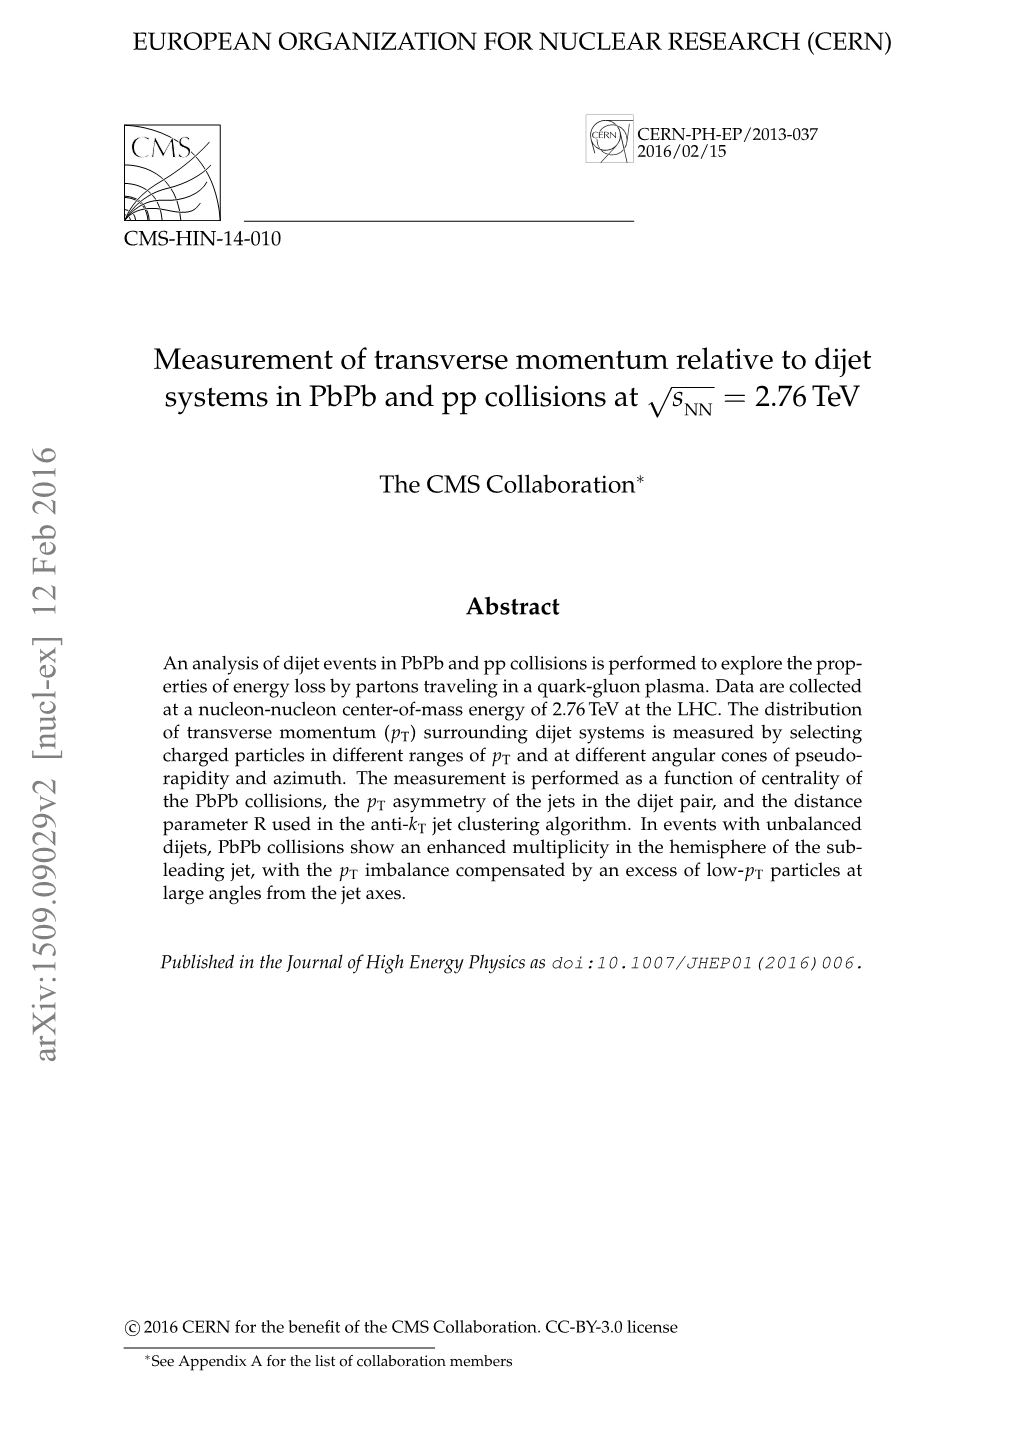 Measurement of Transverse Momentum Relative to Dijet Systems